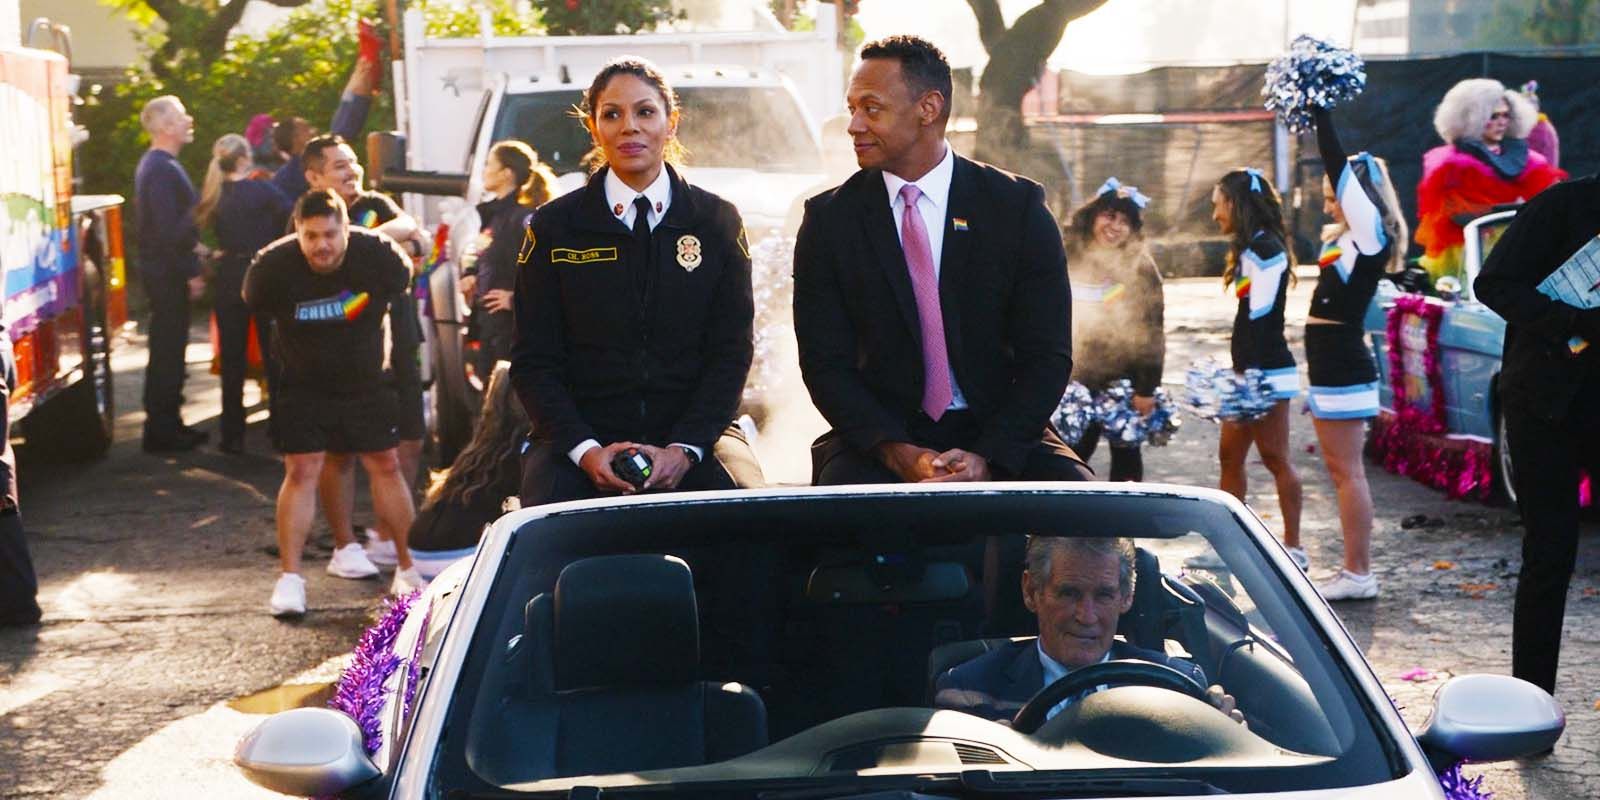 Merle Dandridge as Chief Natasha Ross and Emerson Brooks as Mayor Robel Osman in Station 19 season 7, episode 3